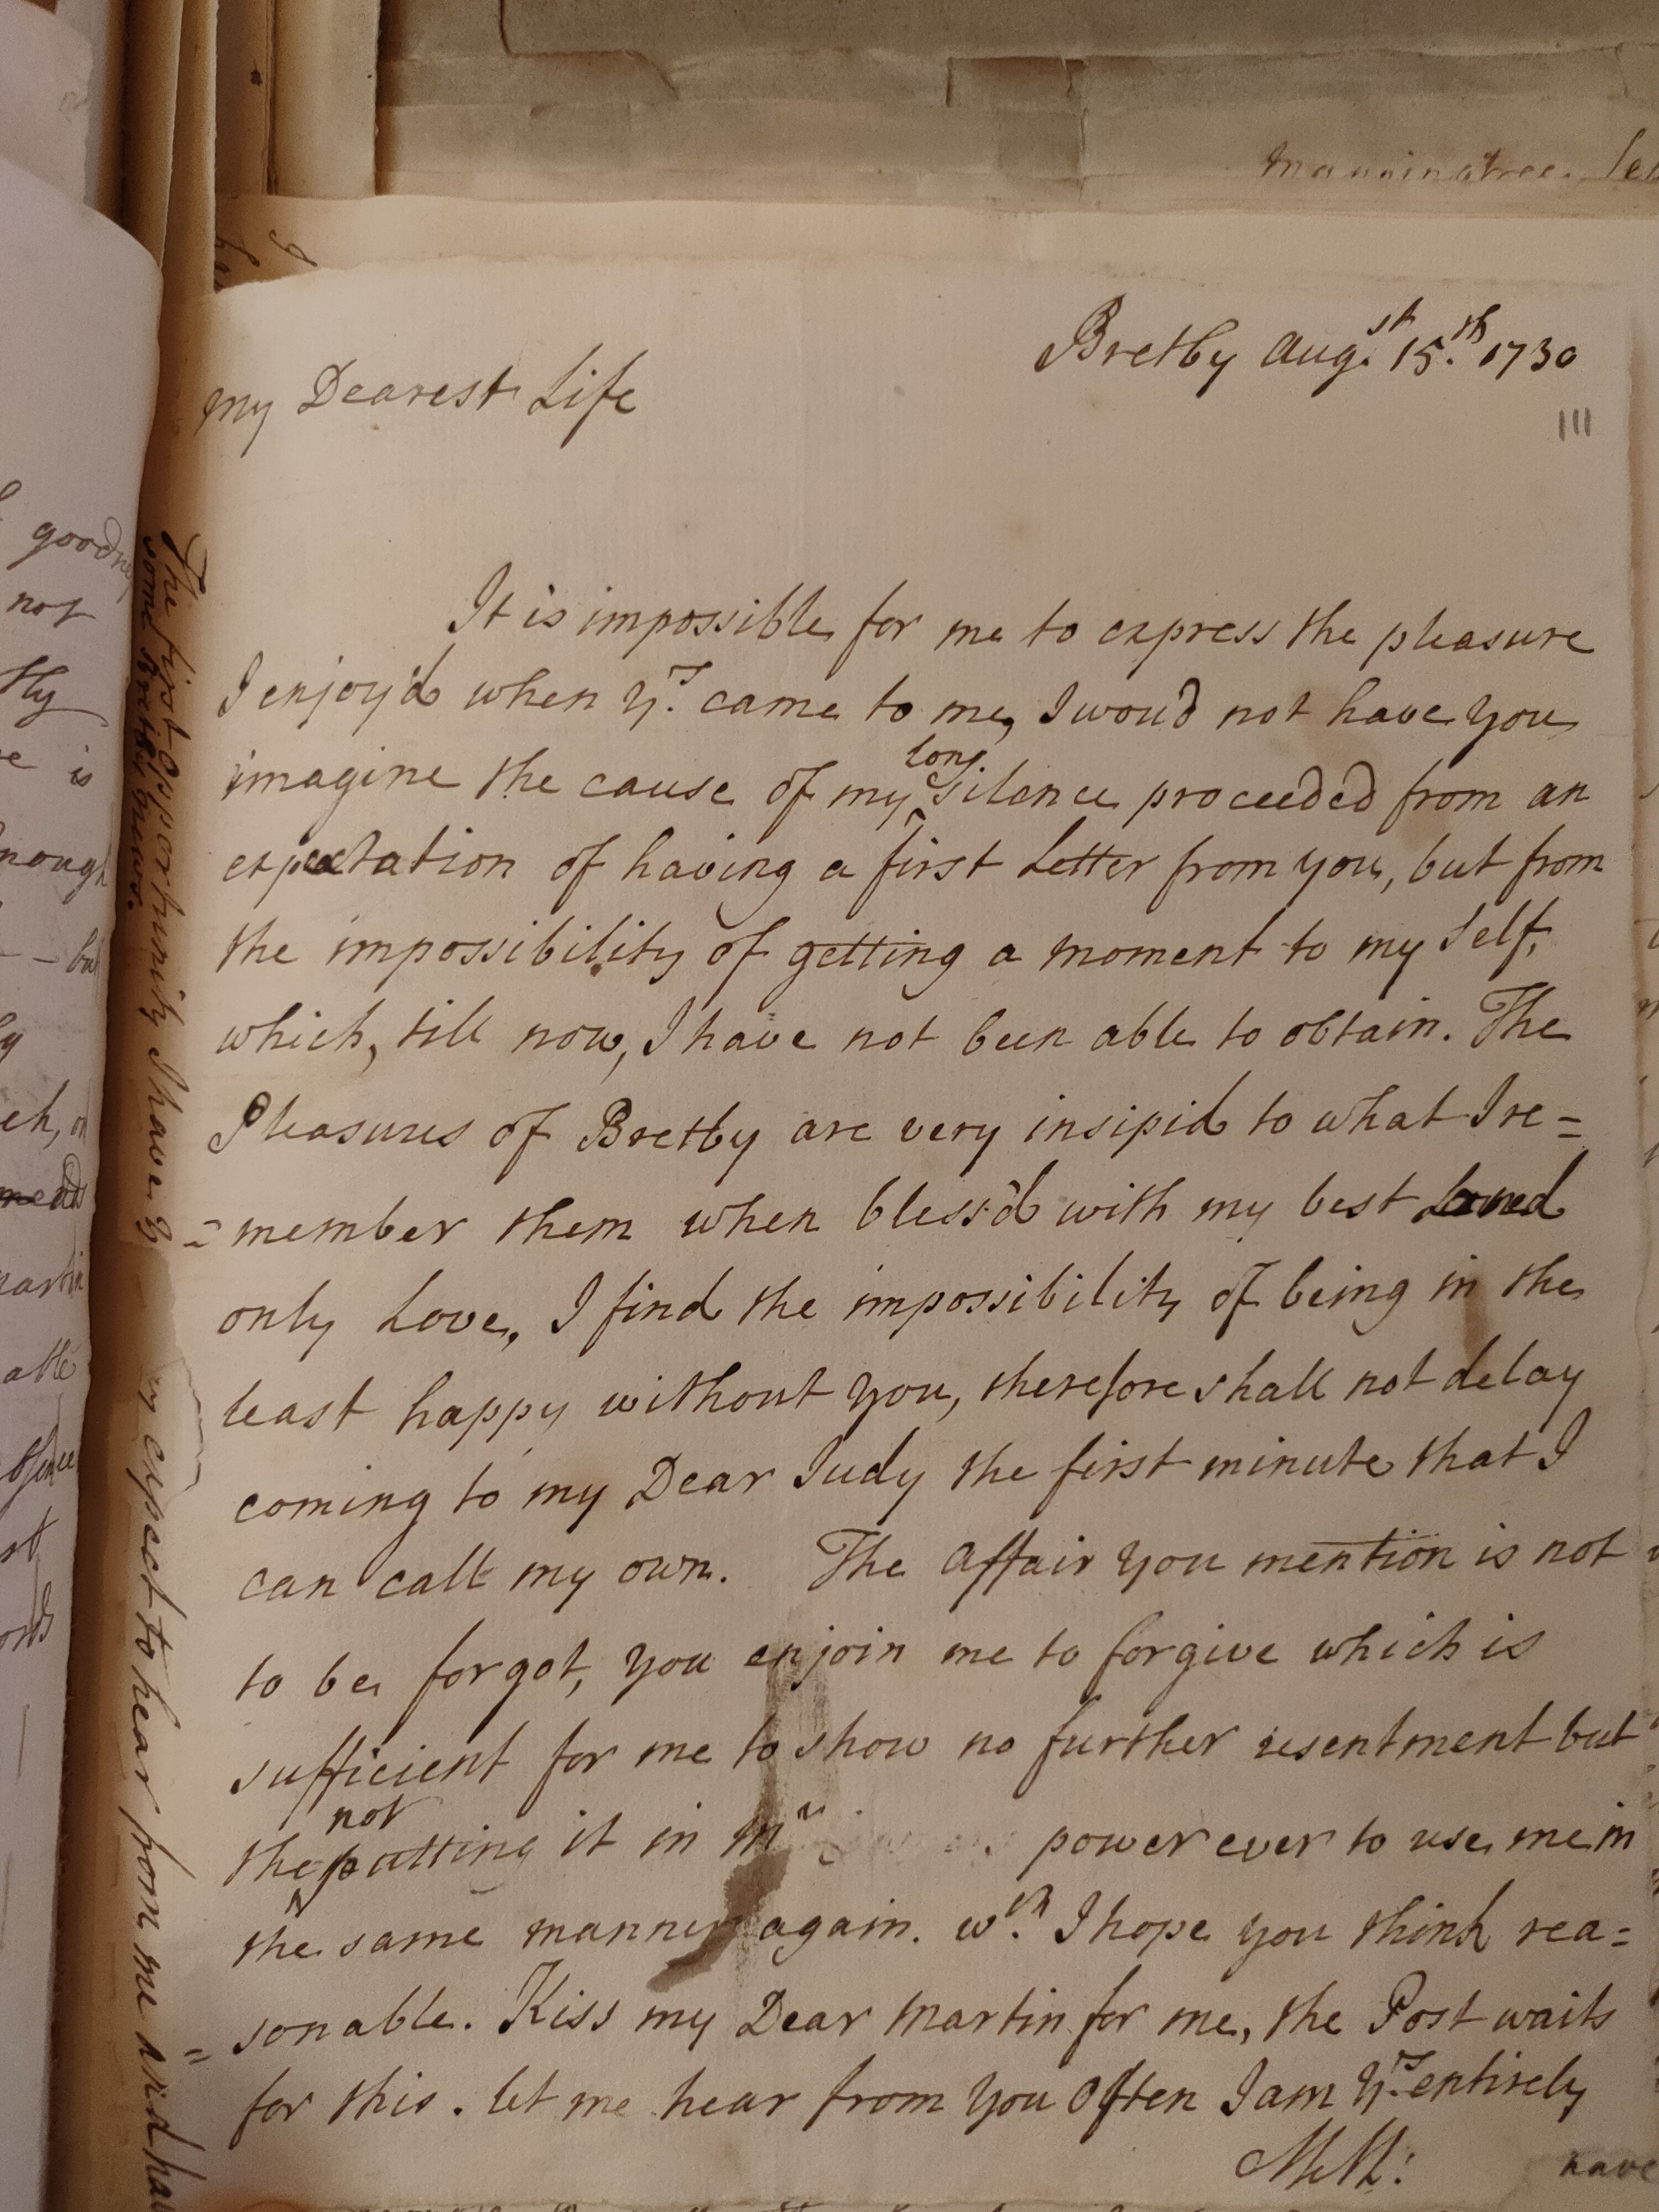 Image #1 of letter: Judith Madan to Martin Madan, 15 August 1730